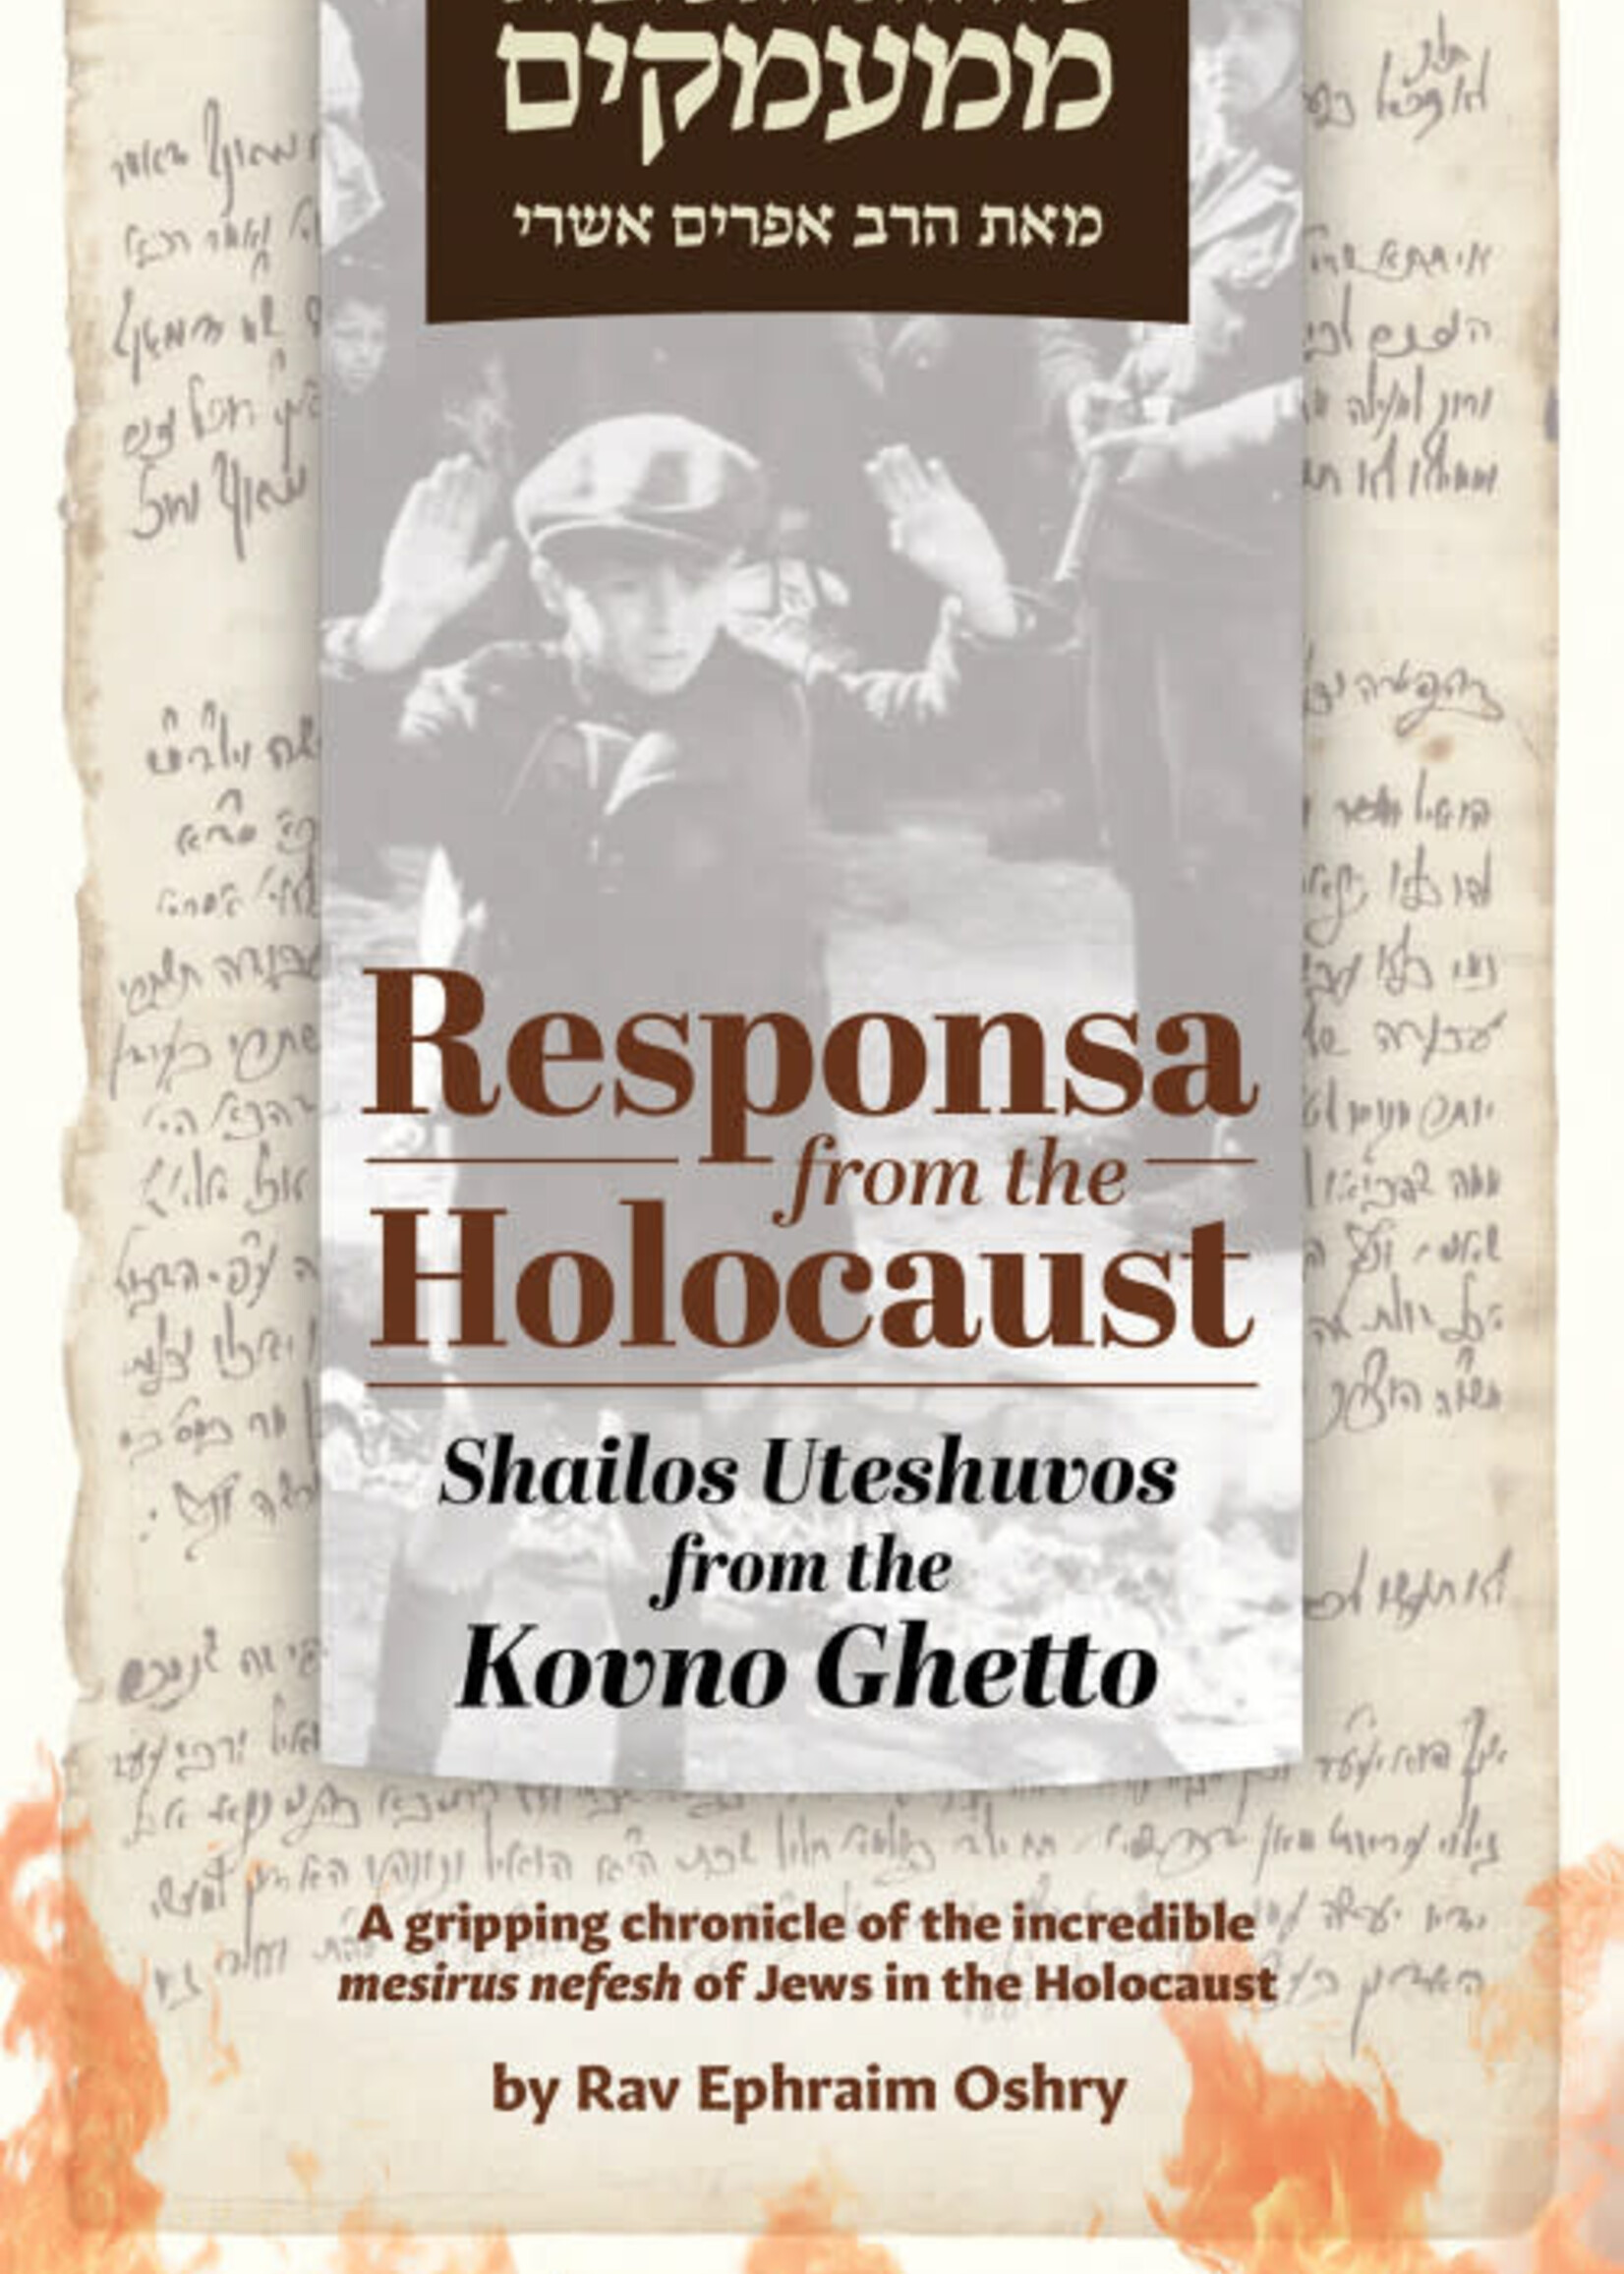 Responsa from the Holocaust Shailos Uteshuvos from the Kovno Ghetto [hardcover]